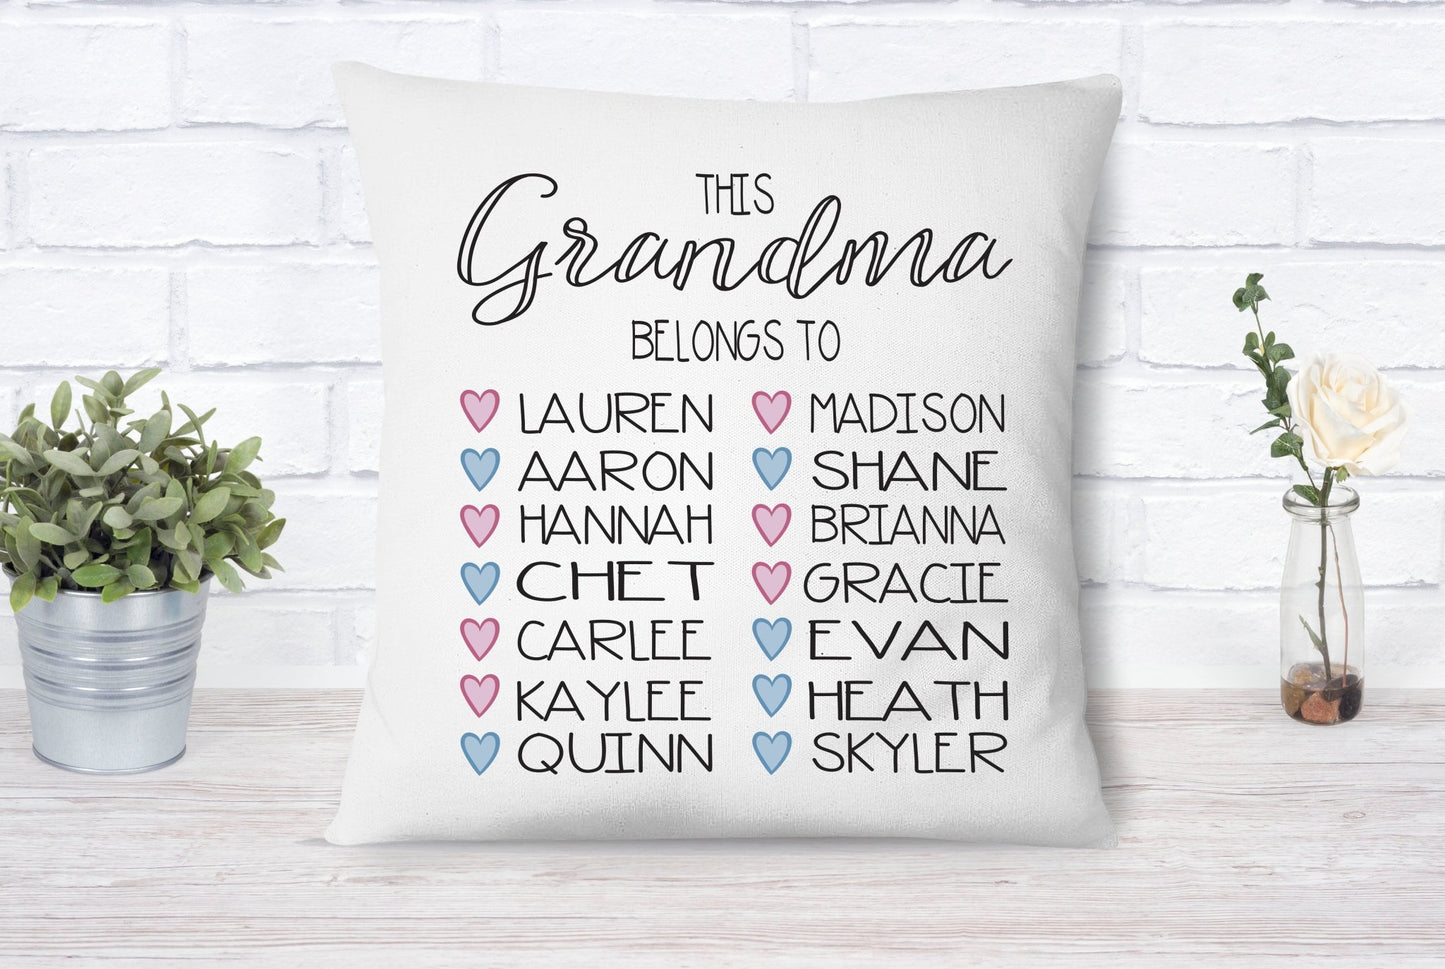 Personalized Grandma Belongs To Pillow - Squishy Cheeks